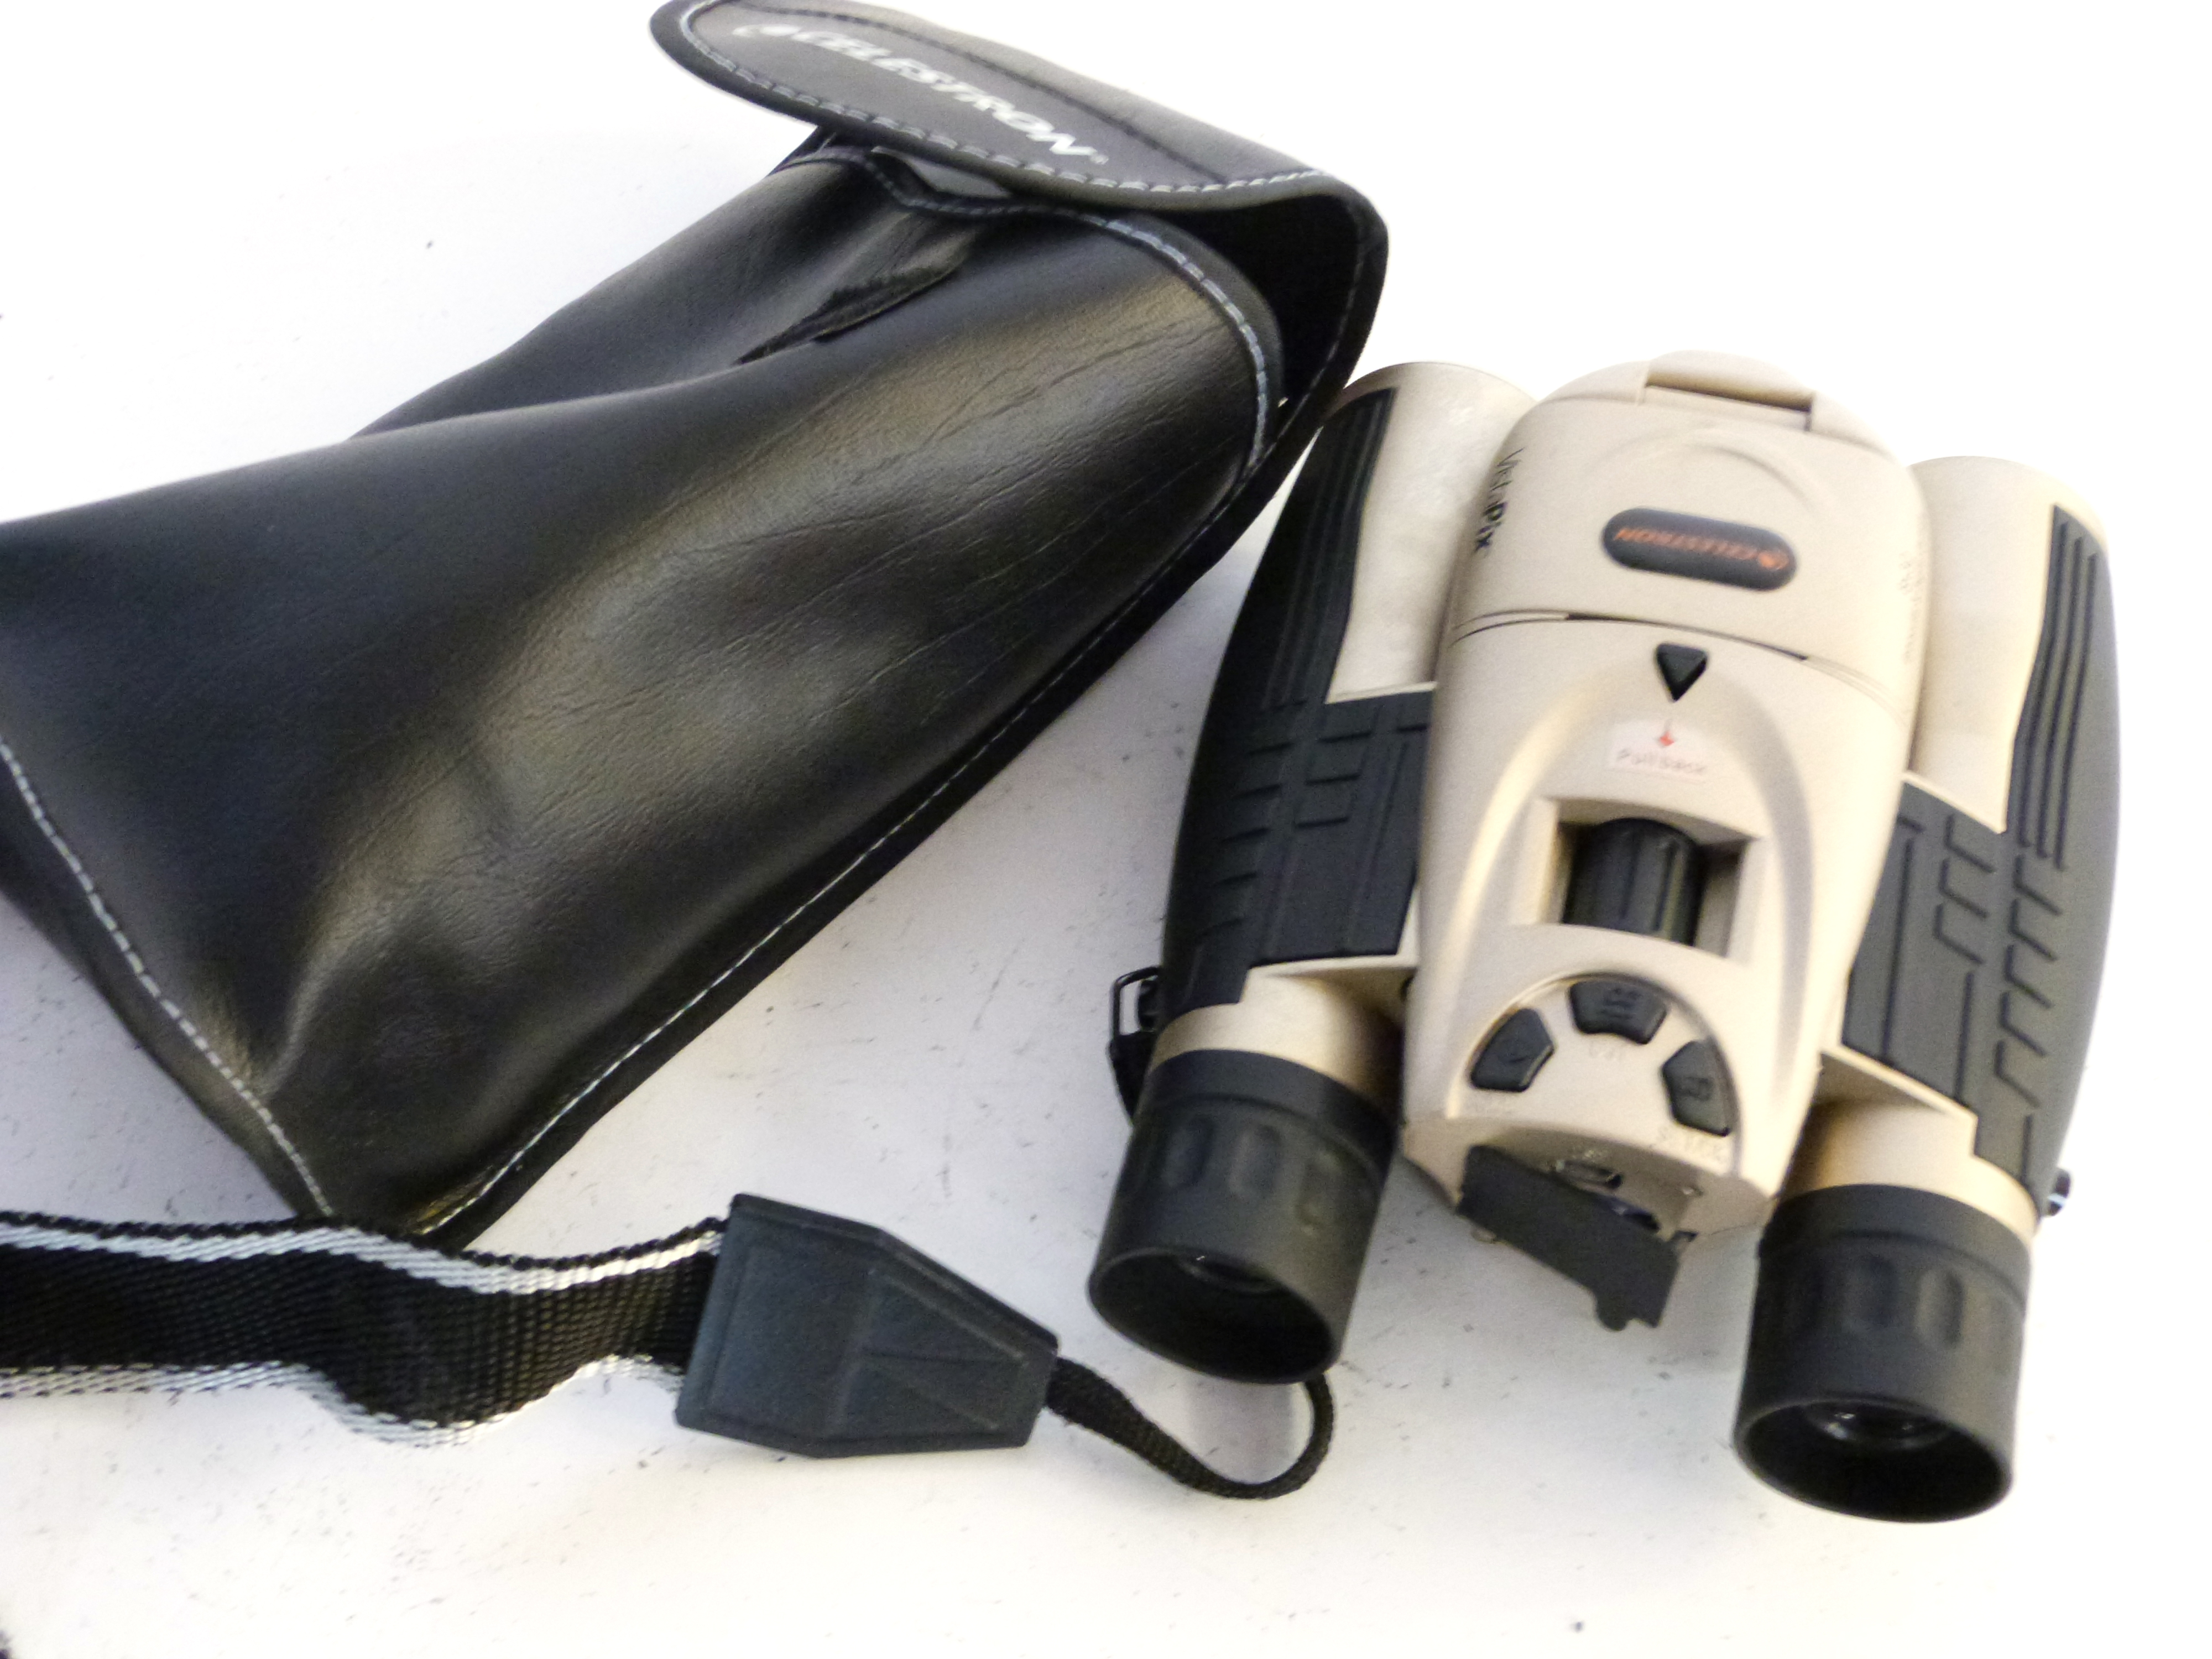 Celestron Vistapix 8x32 binoculars/digital camera together with hard case and manual